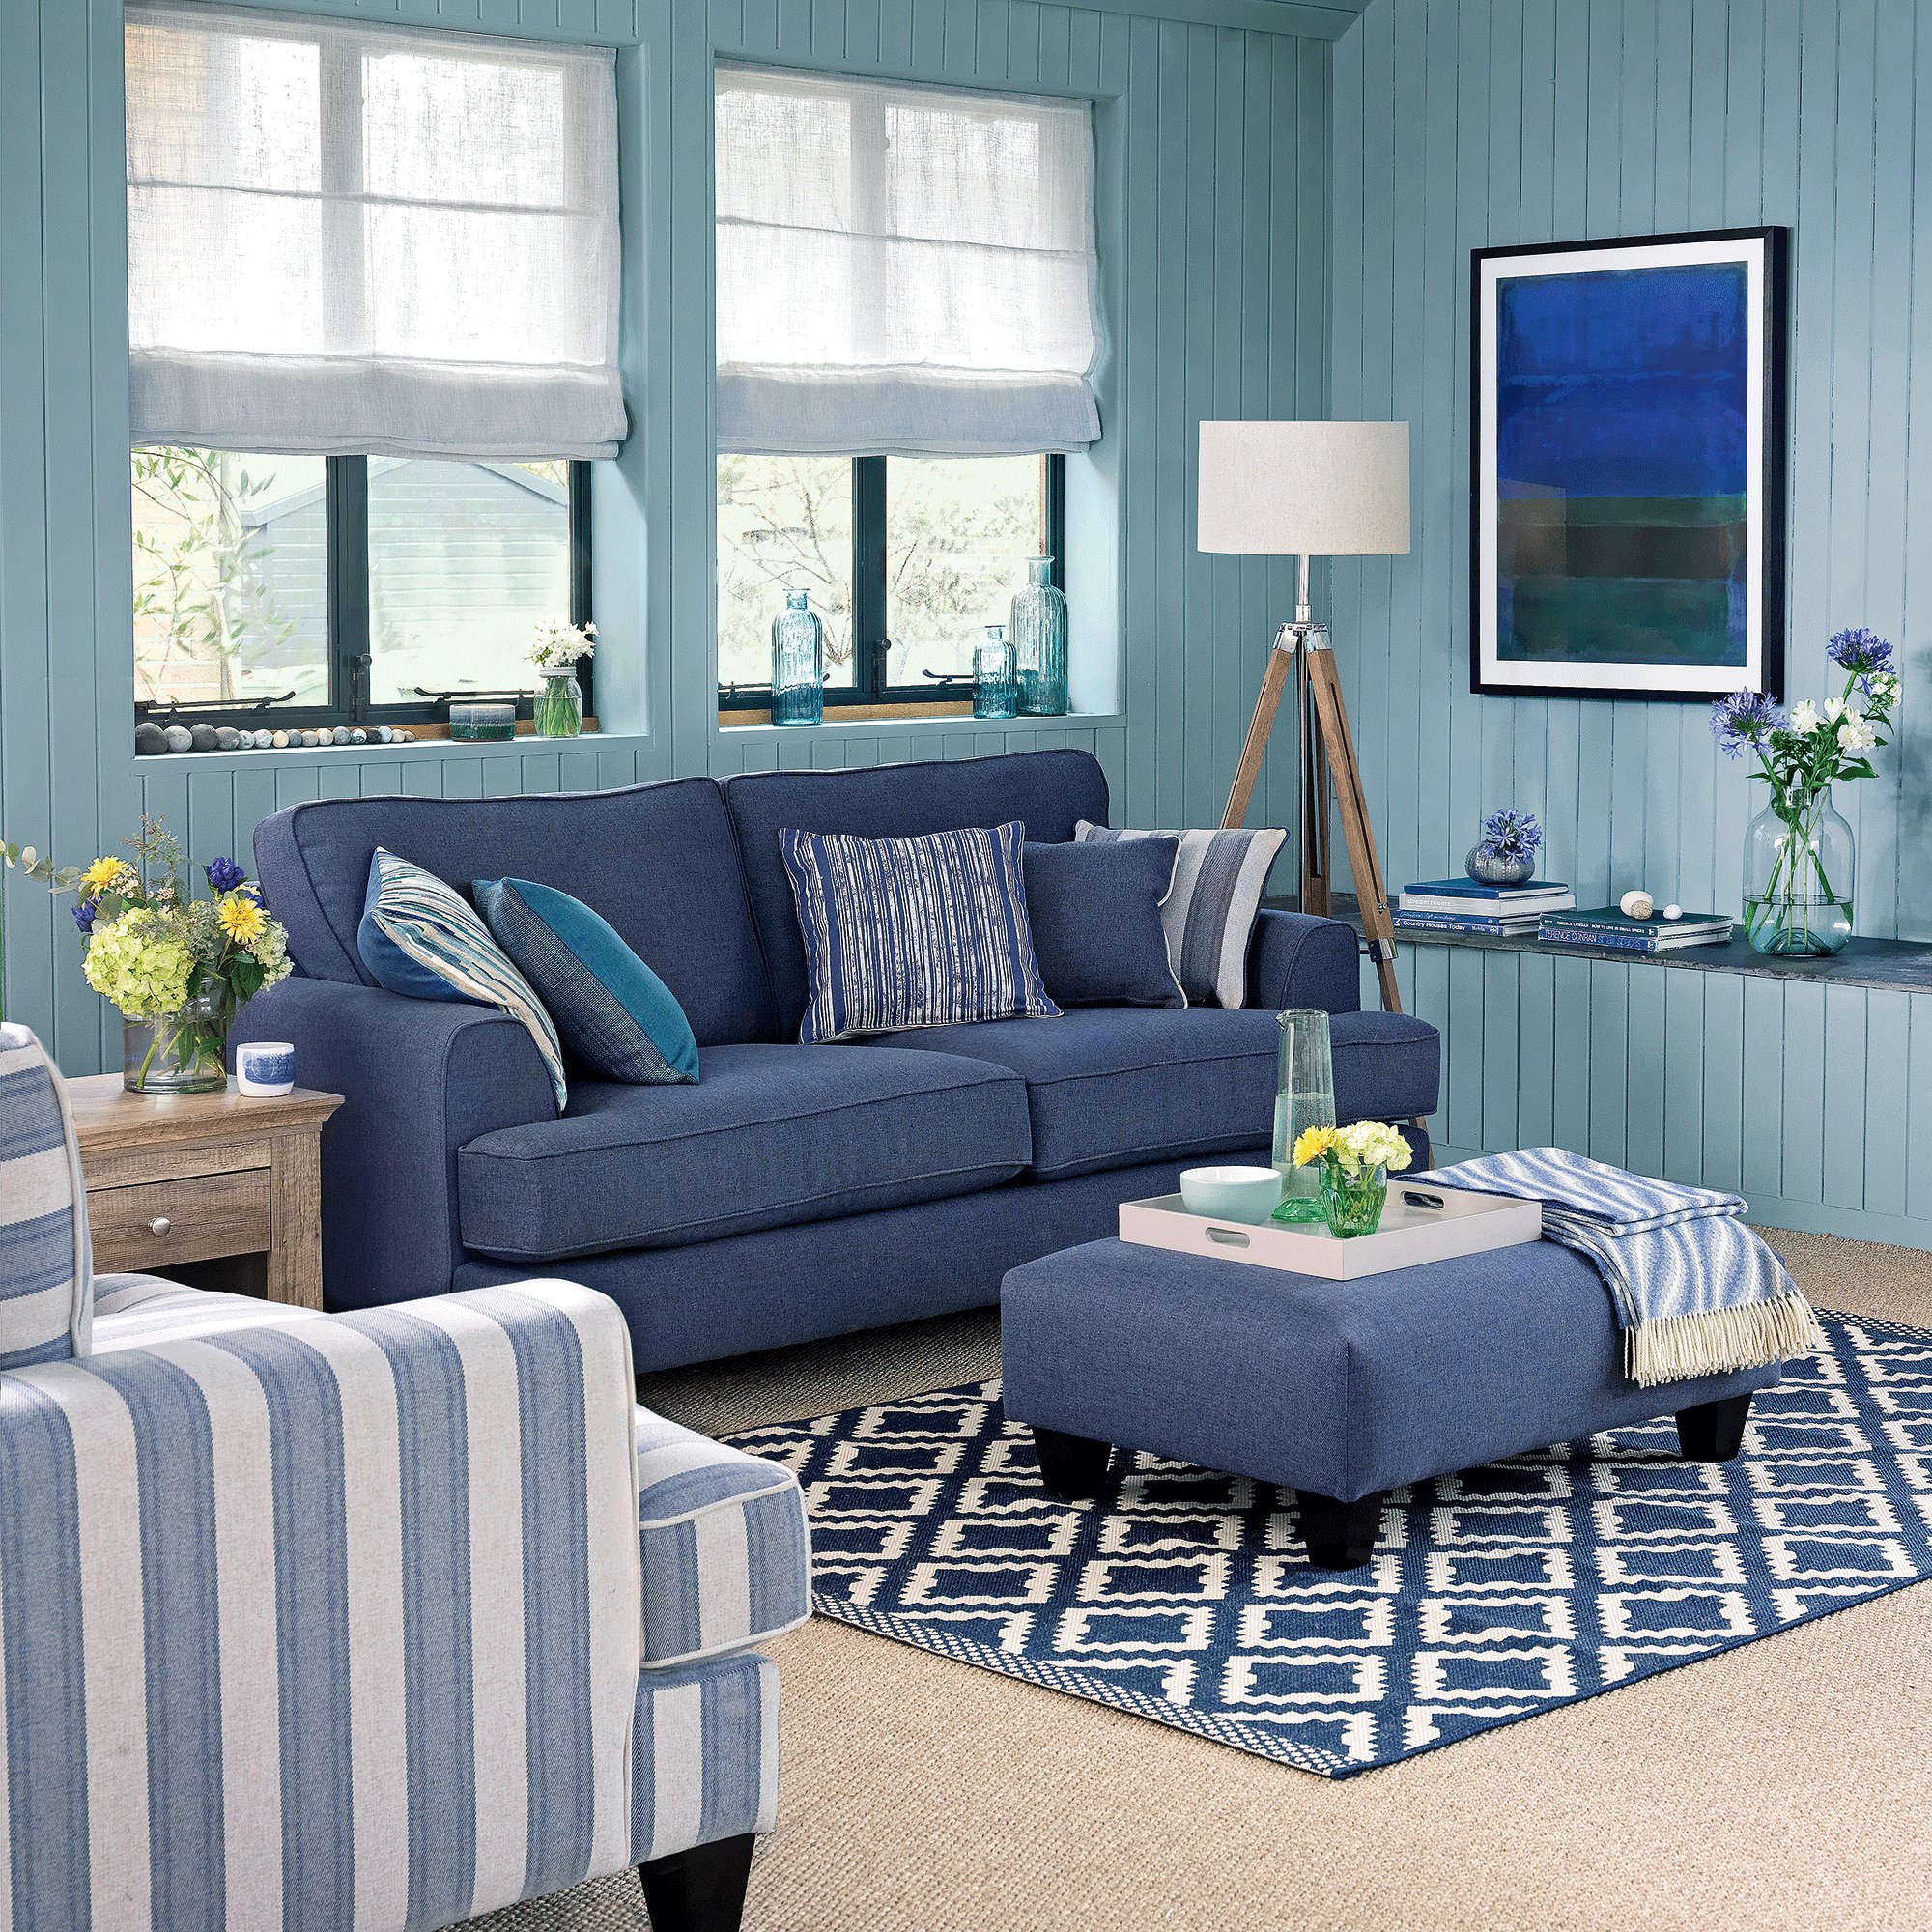 Blue living room with blue sofa